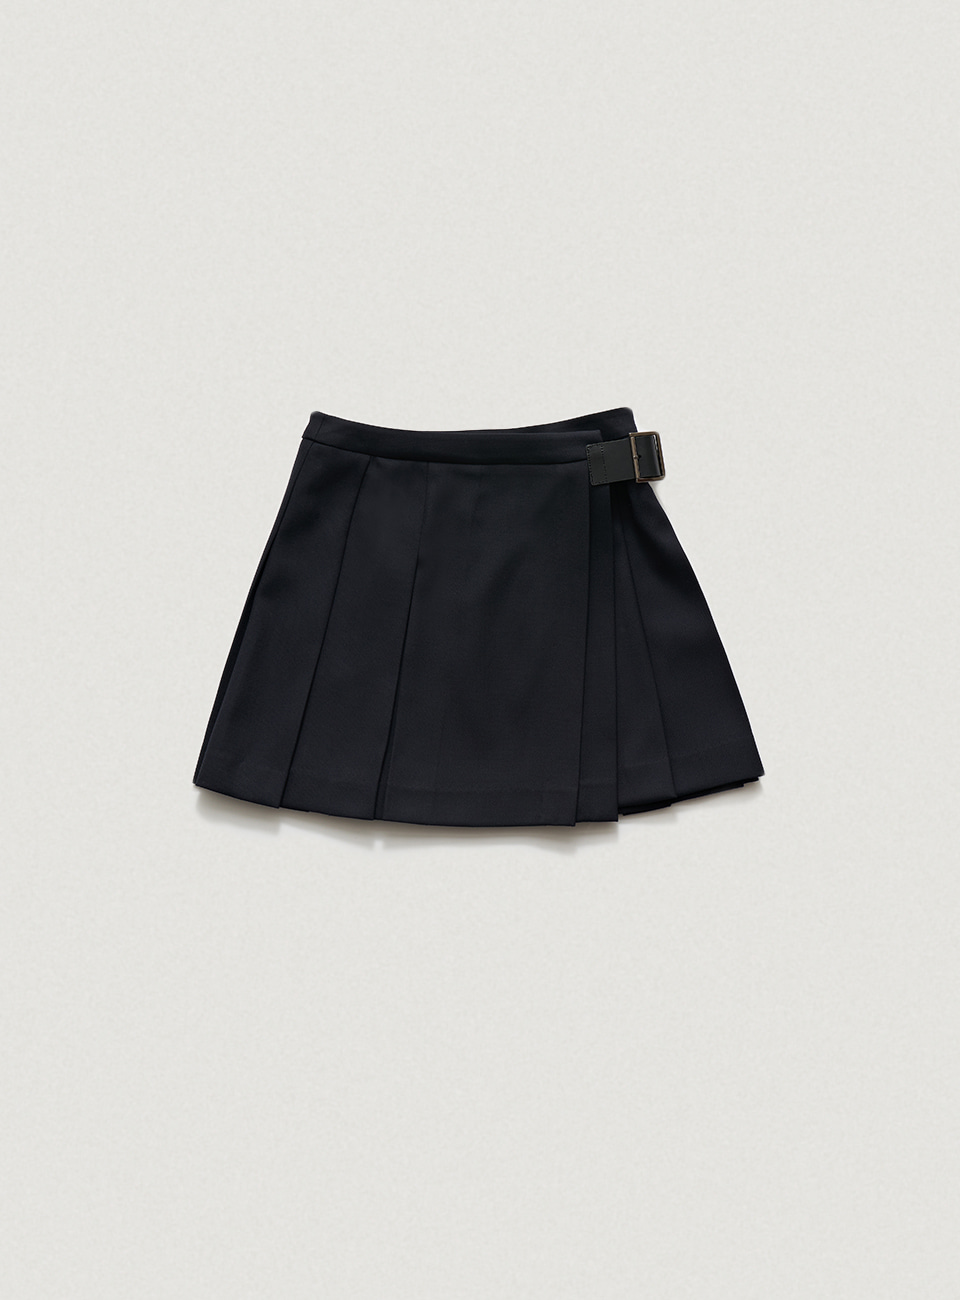 Buckle-Strap Pleated Skirt [6월 중순 순차 배송]